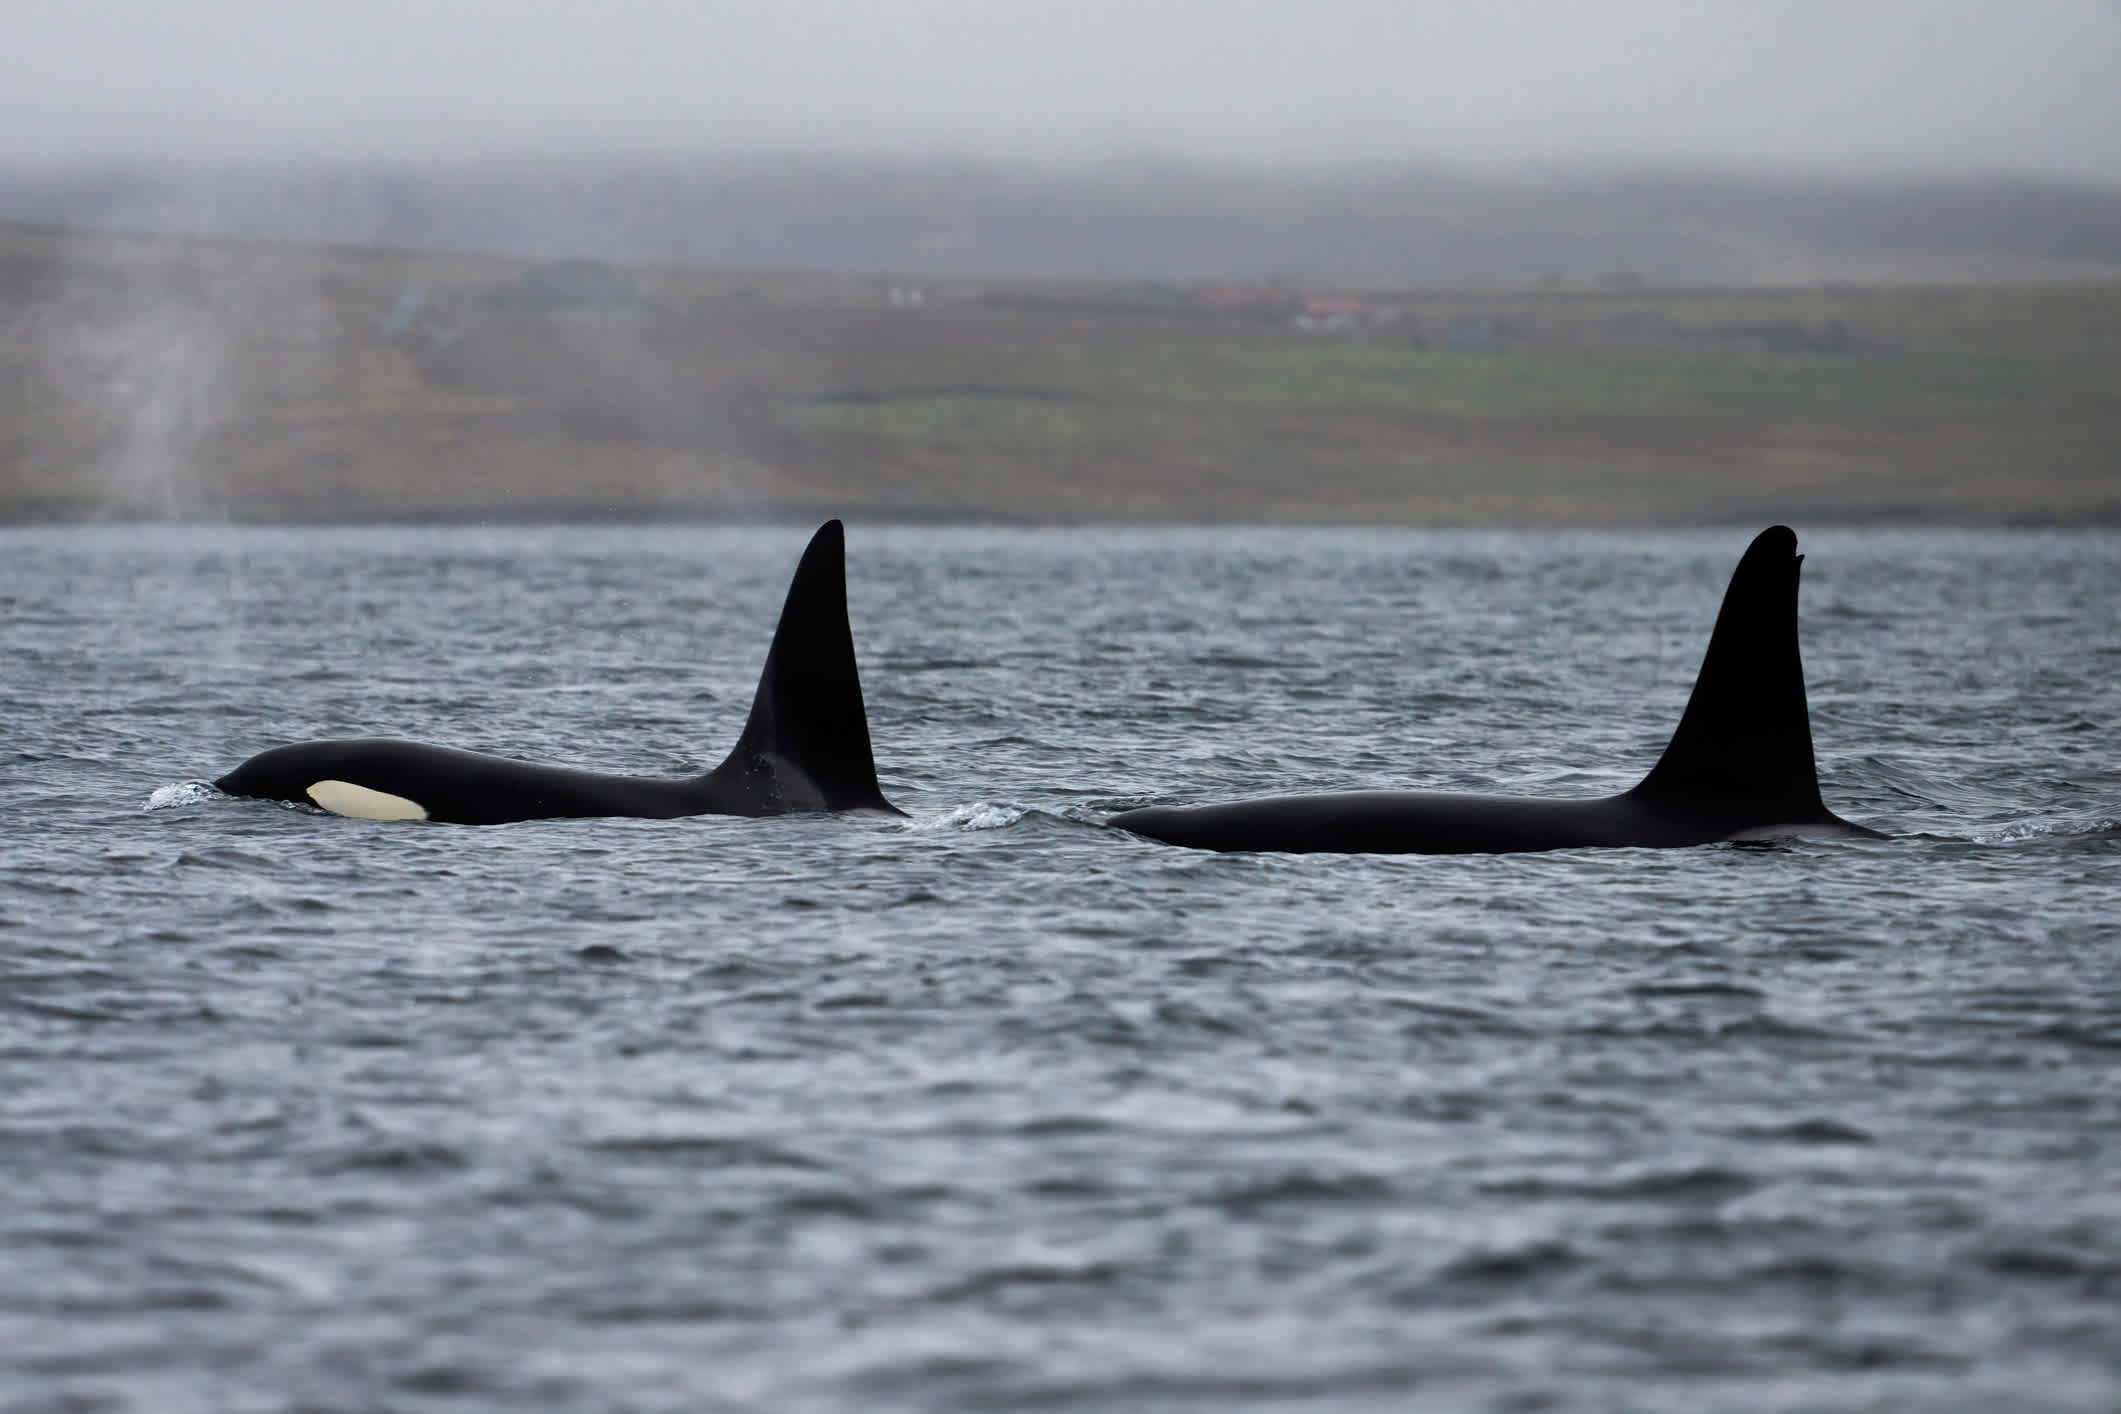 Zwei Orcas in den Gewässern um Shetlandinseln, Schottland. 

